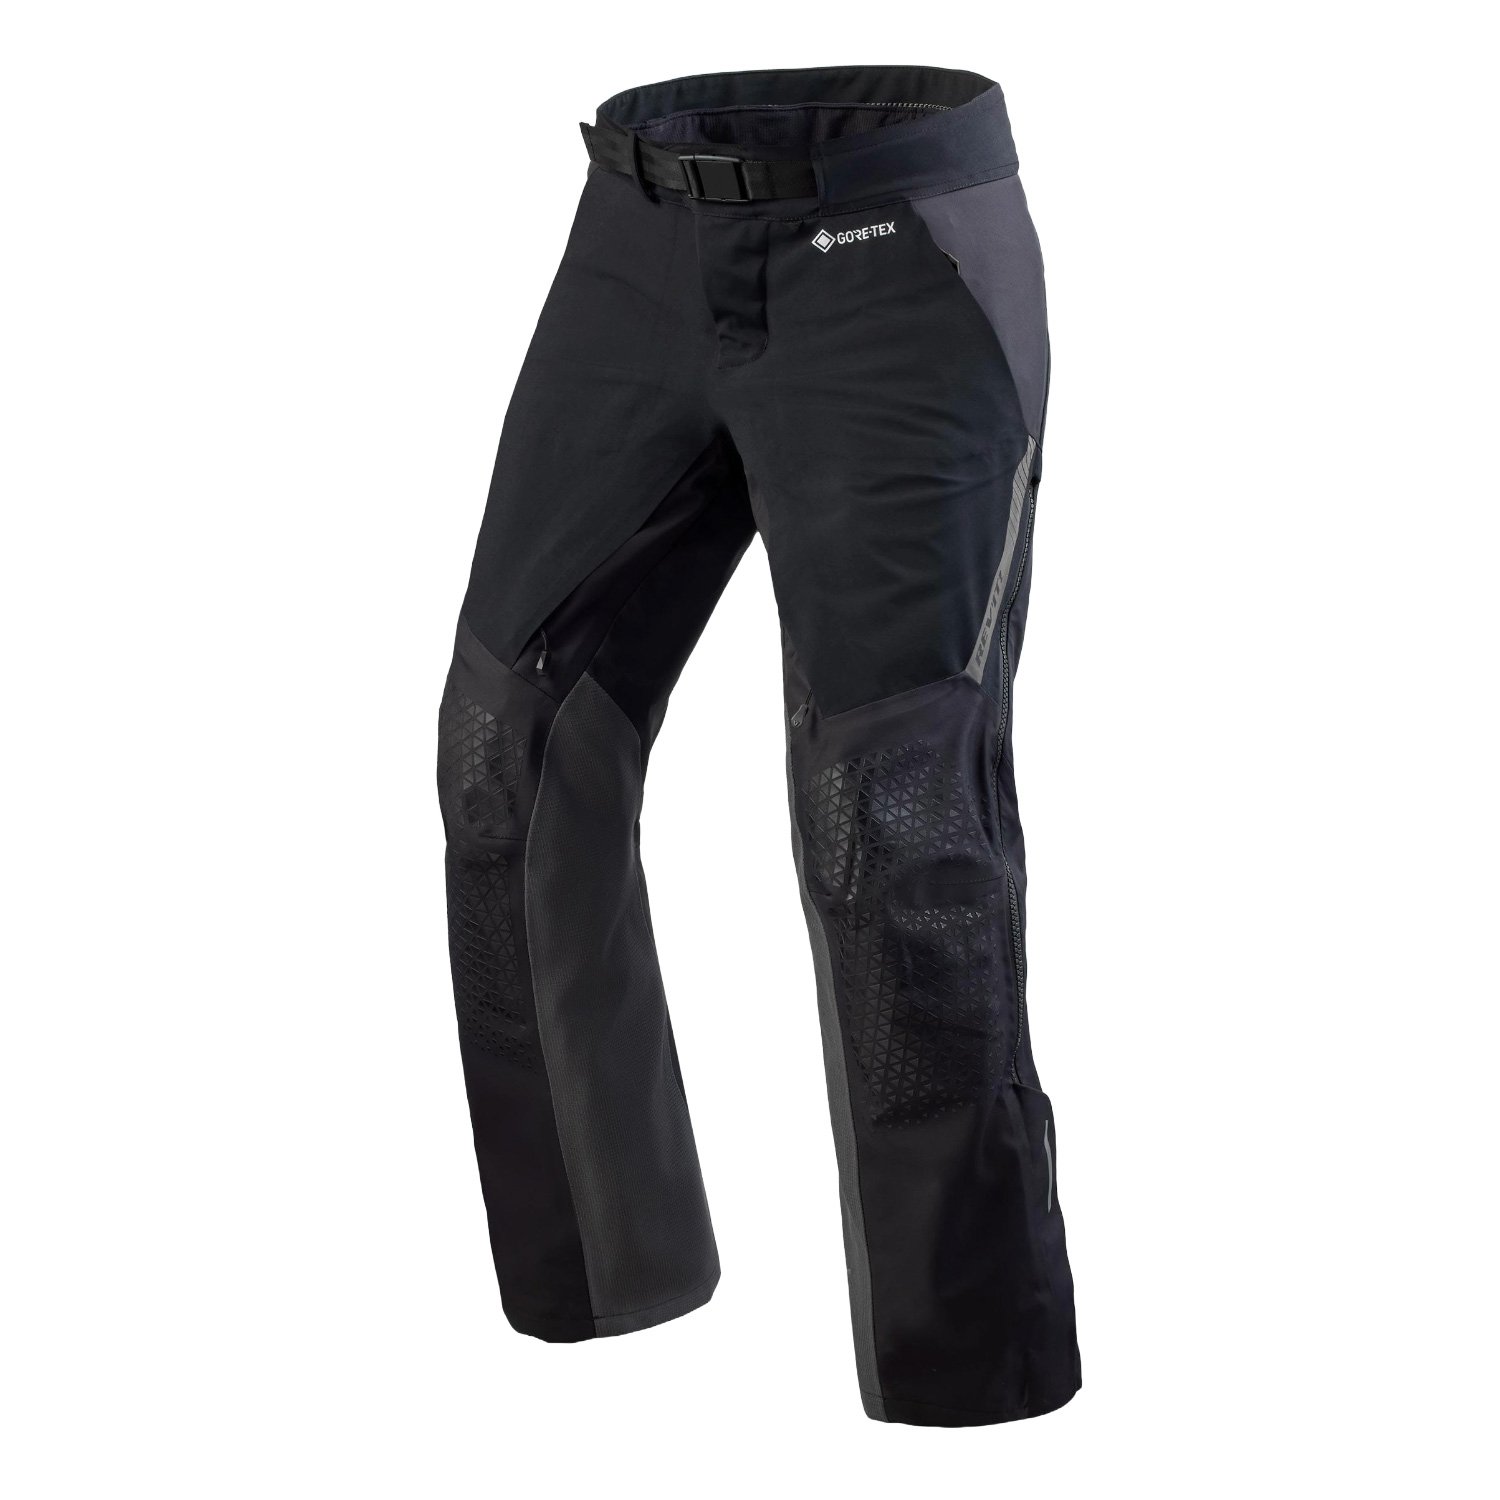 Image of REV'IT! Stratum GTX Black Grey Long Motorcycle Pants Size L ID 8700001351287